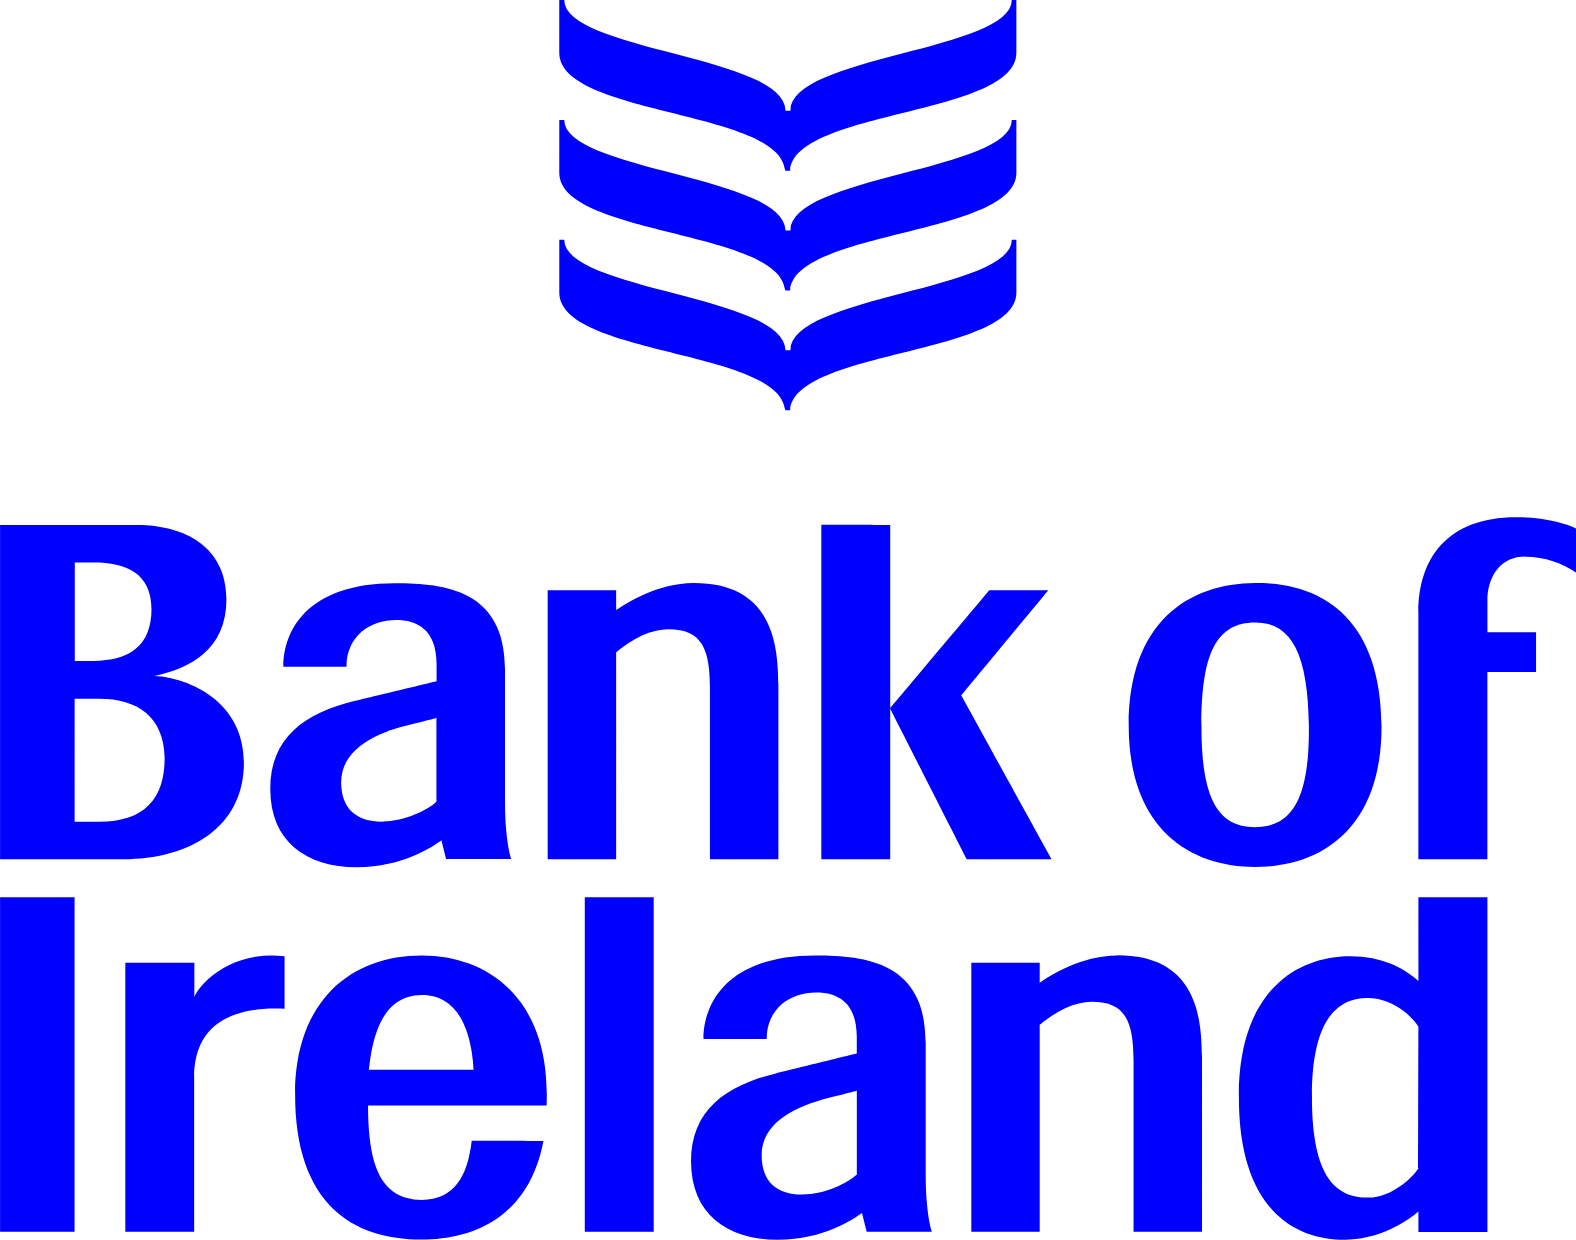 Bank of Ireland Group logo large (transparent PNG)